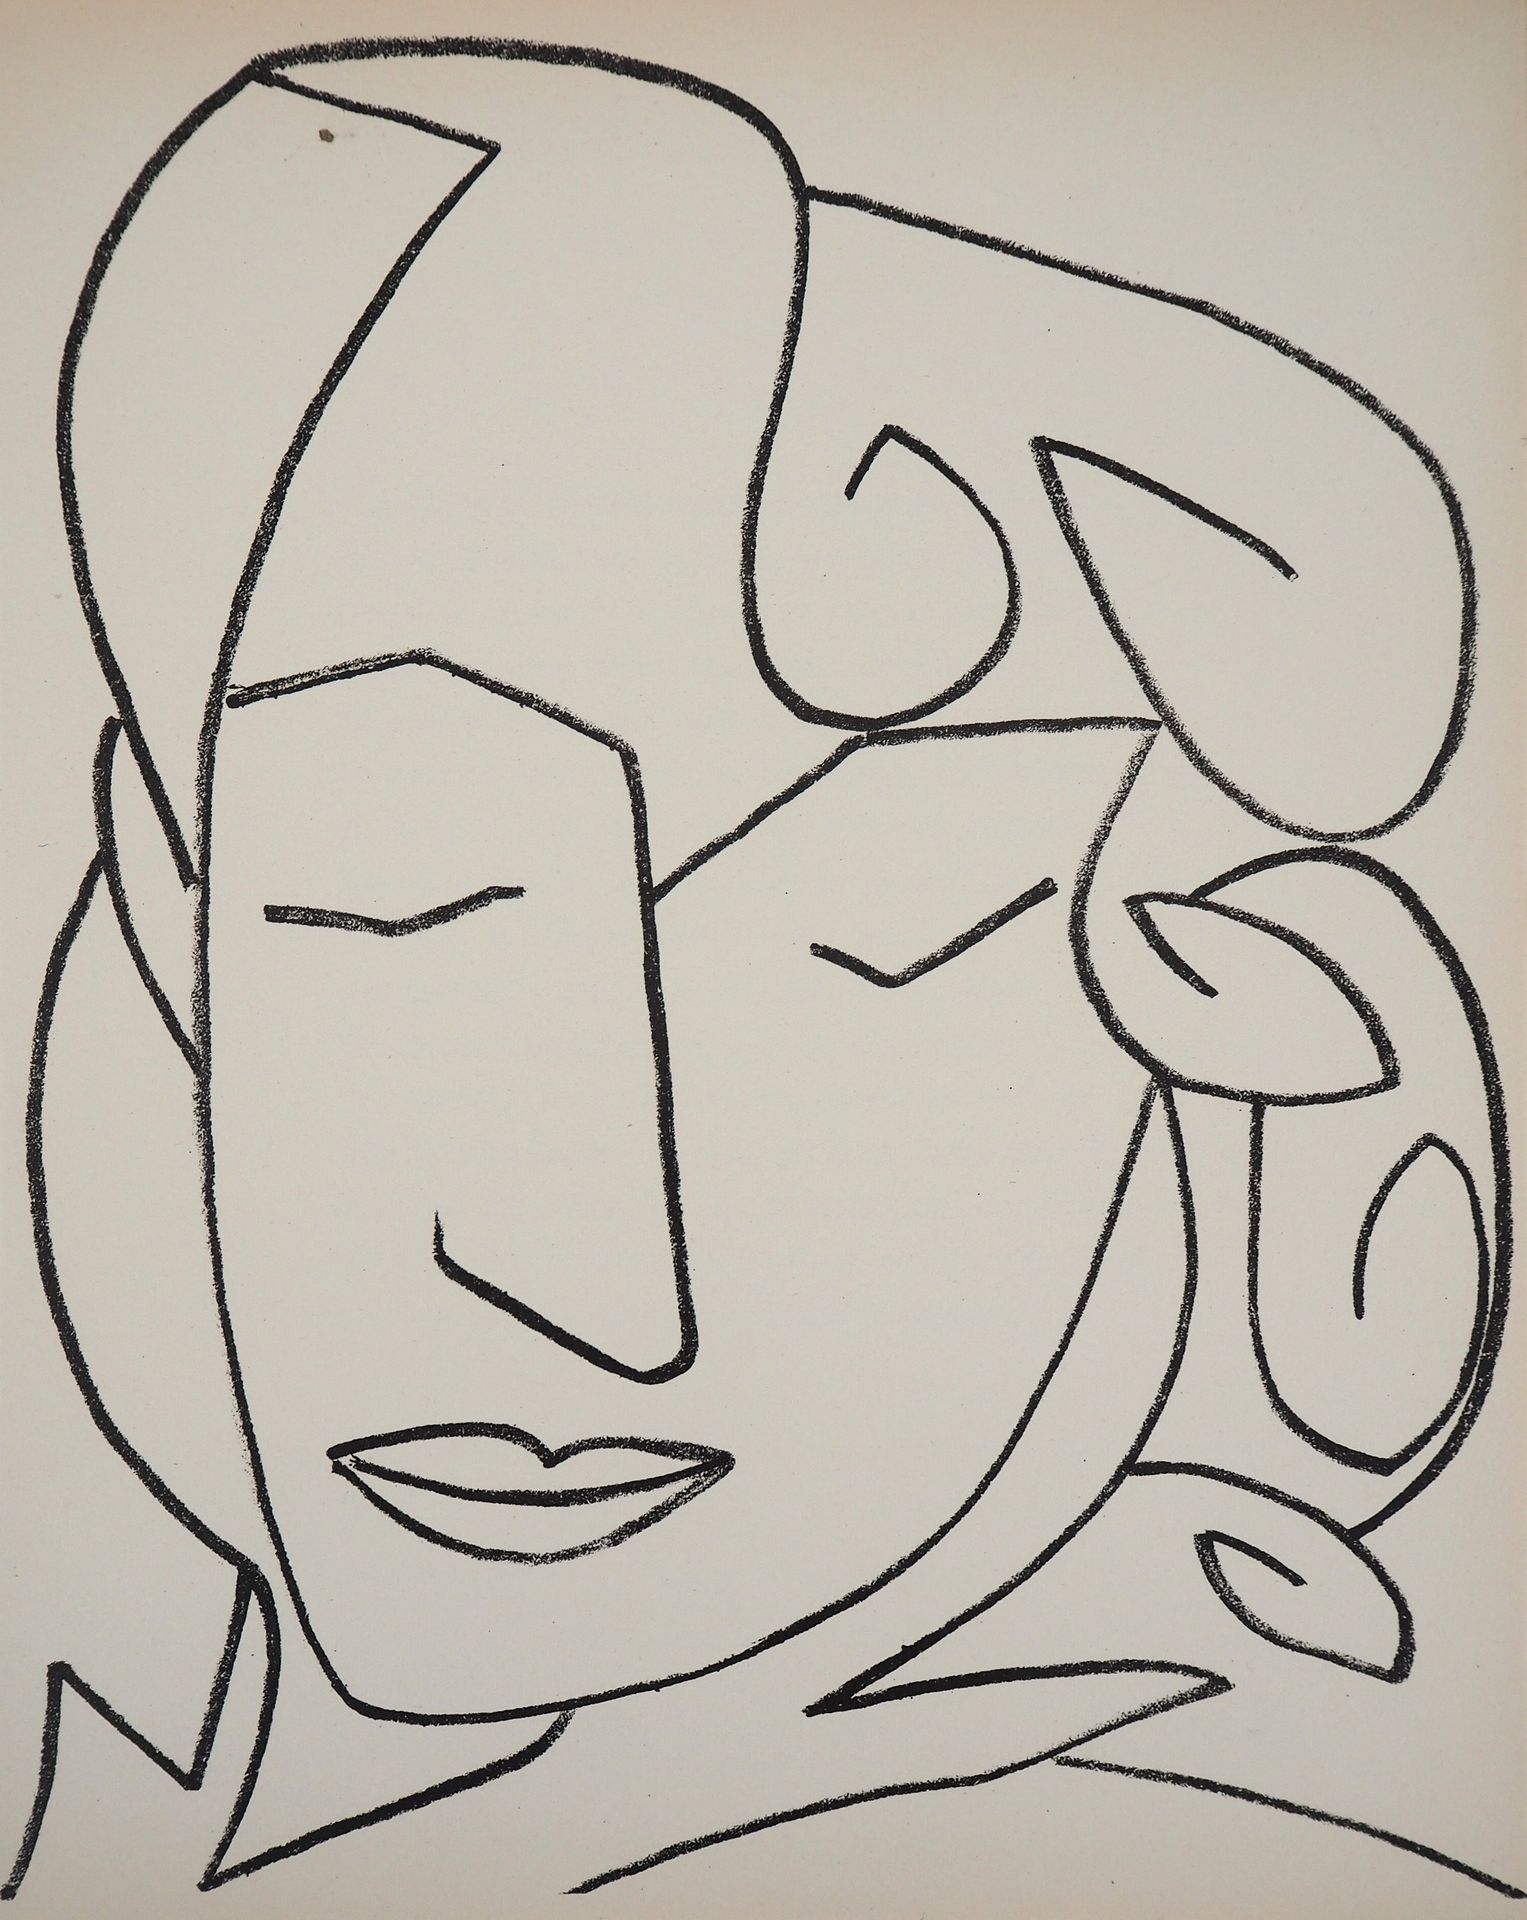 FRANÇOISE GILOT 弗朗索瓦丝-吉洛特 (1921)

闭着眼睛的女人，1951年

原始石版画

马莱梭织纸上 28 x 22.5 cm

印刷了&hellip;